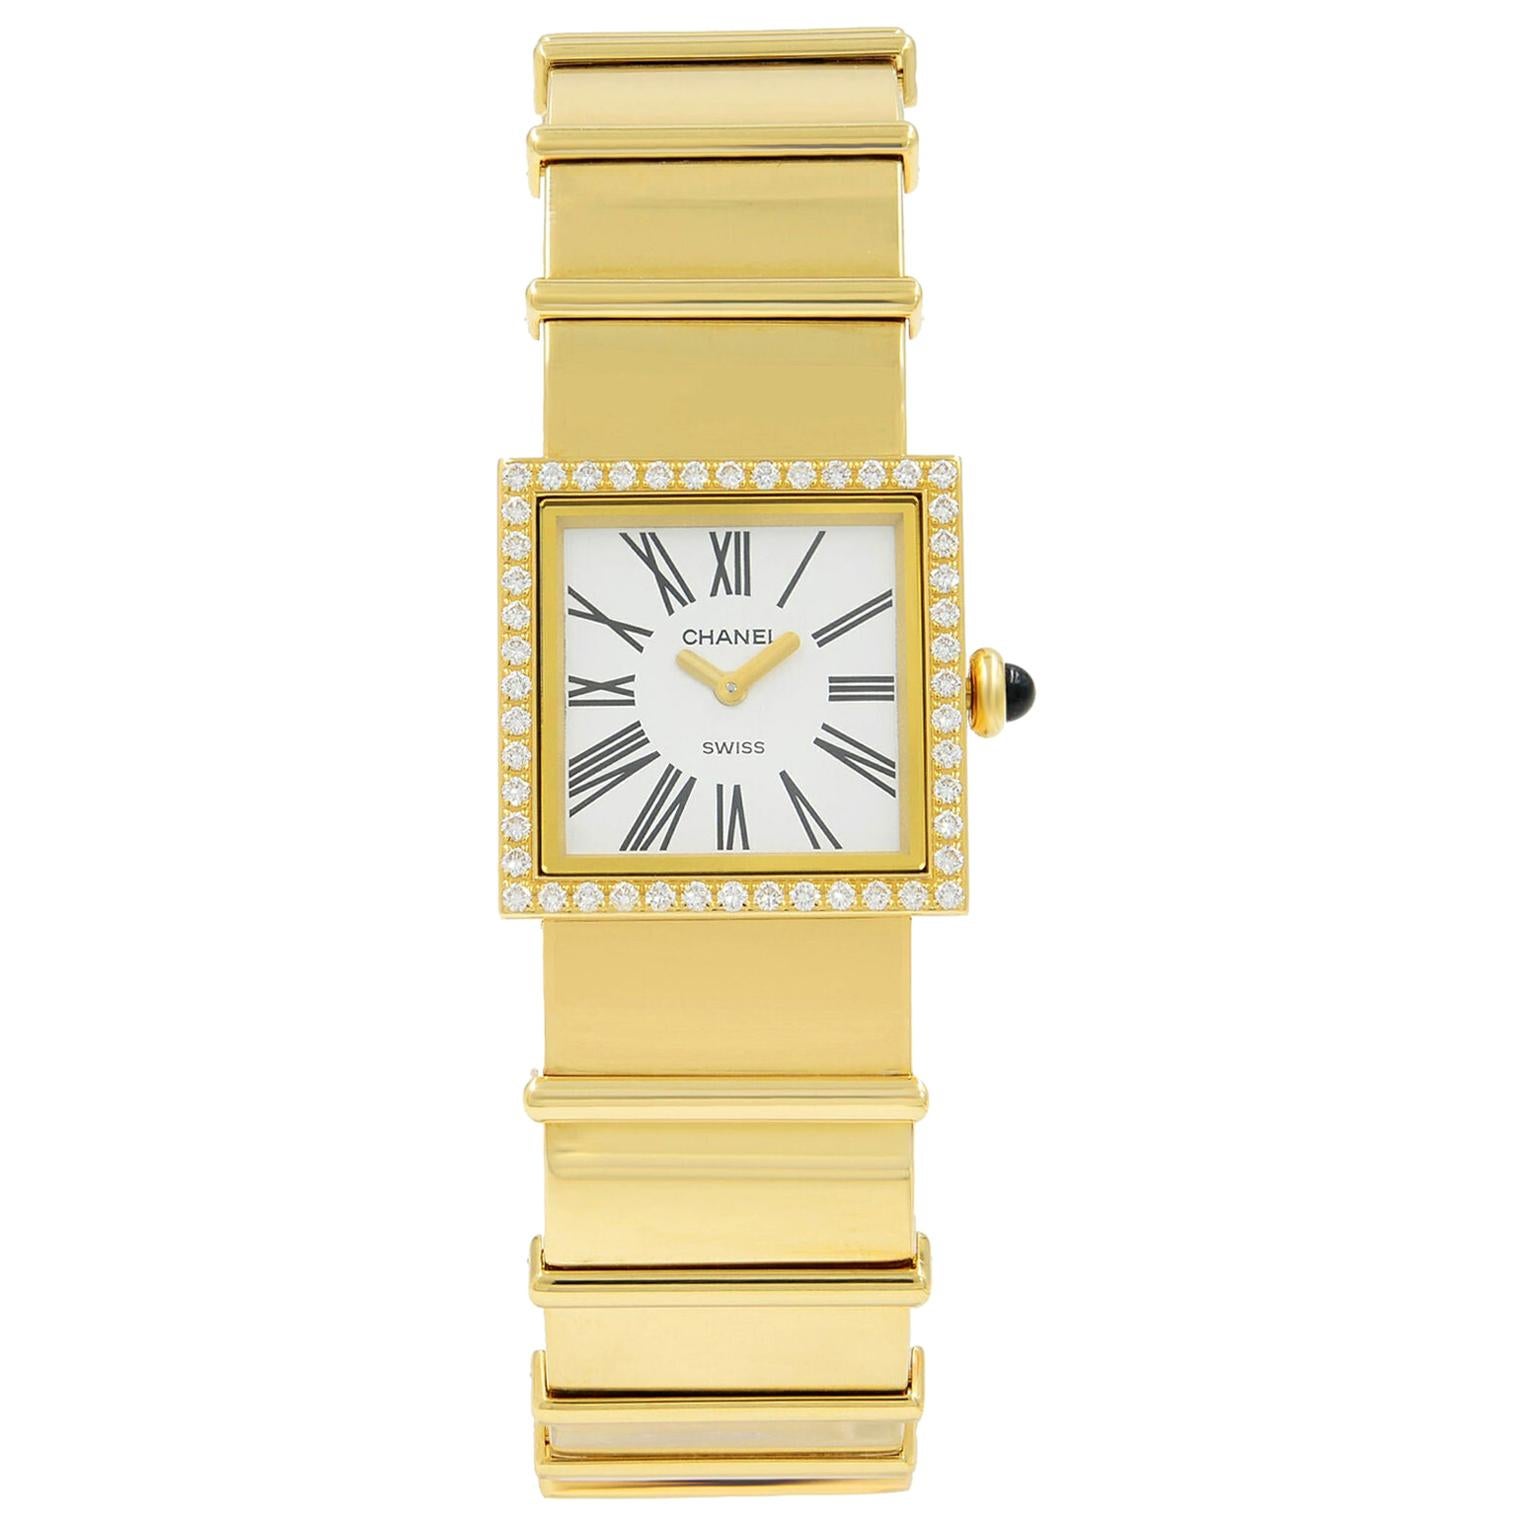 Chanel Mademoiselle xxx 18k White Gold Black & Silver dial 22.5mm Quartz  watch – Luxury Watch and Jewelry Market